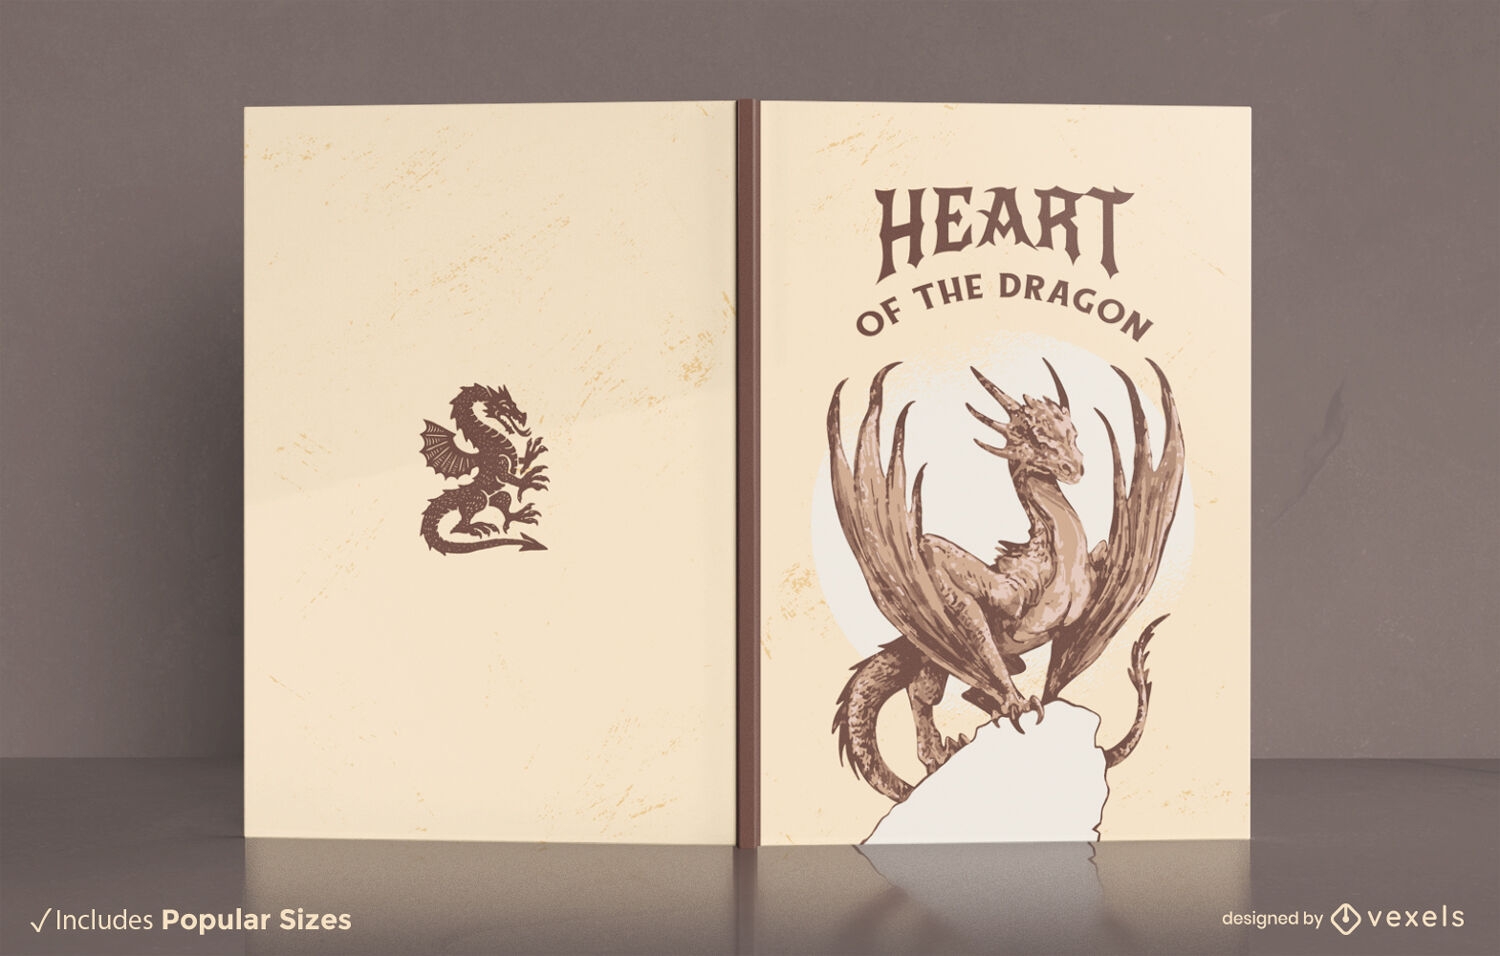 Medieval dragon book cover design